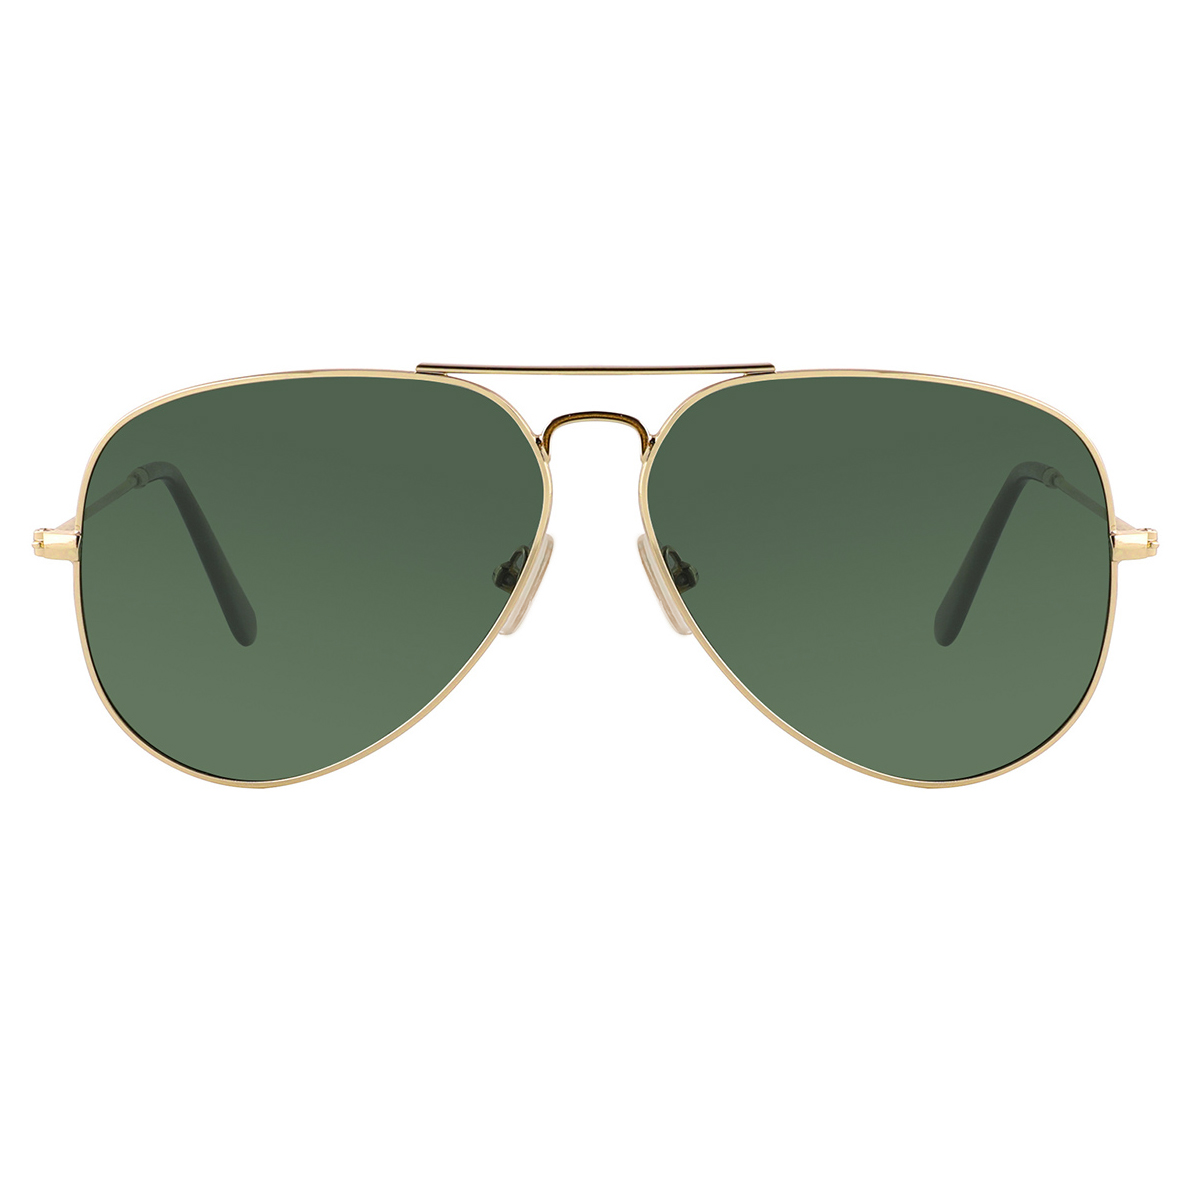 aviator gold1 sunglasses